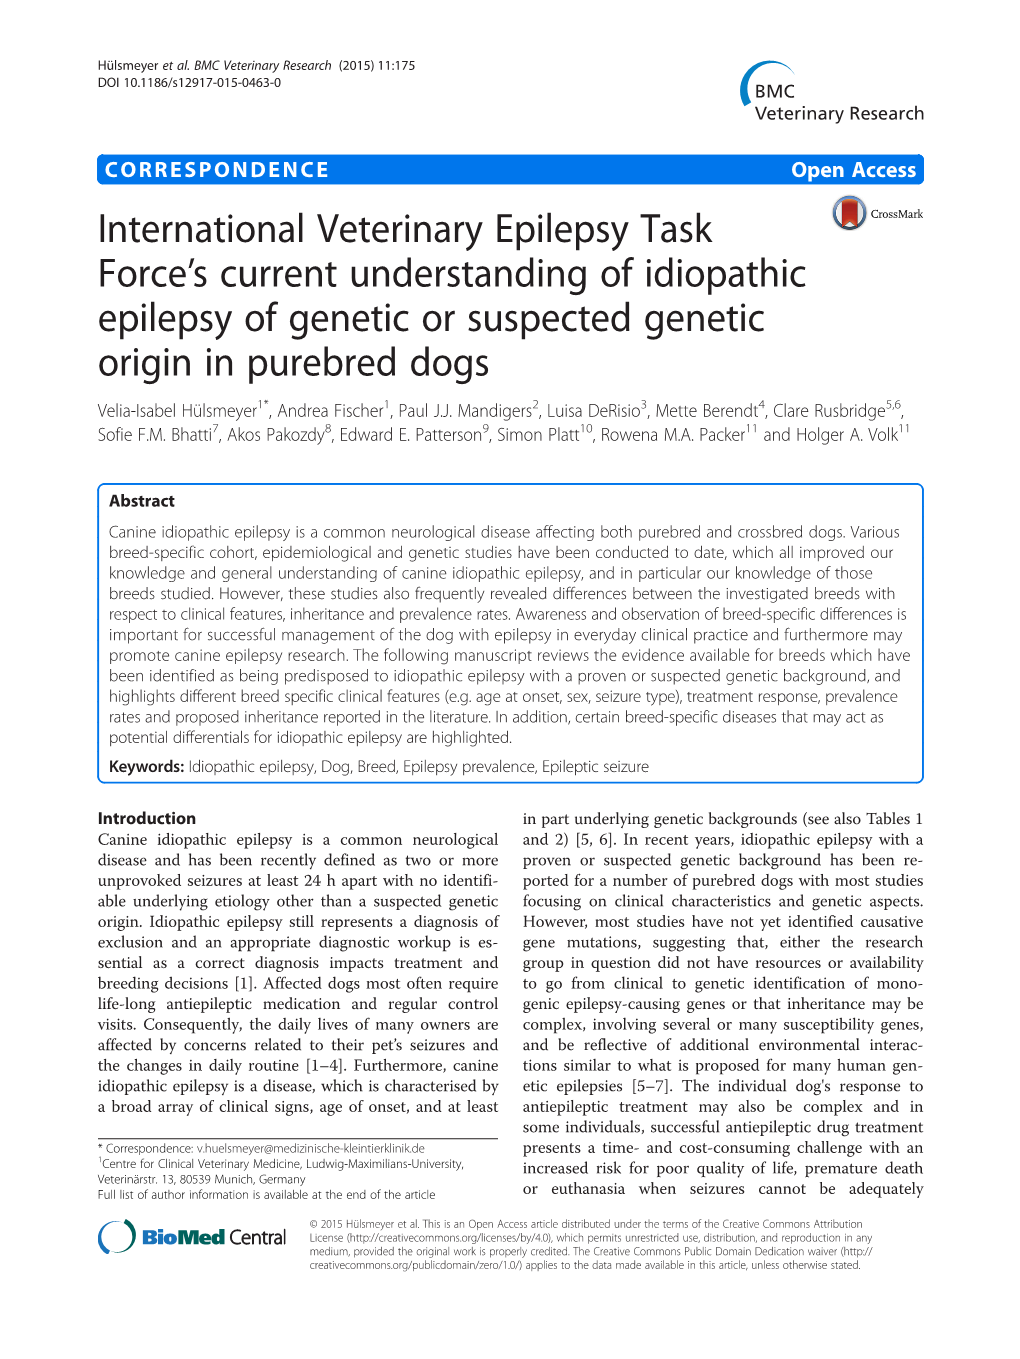 International Veterinary Epilepsy Task Force's Current Understanding Of